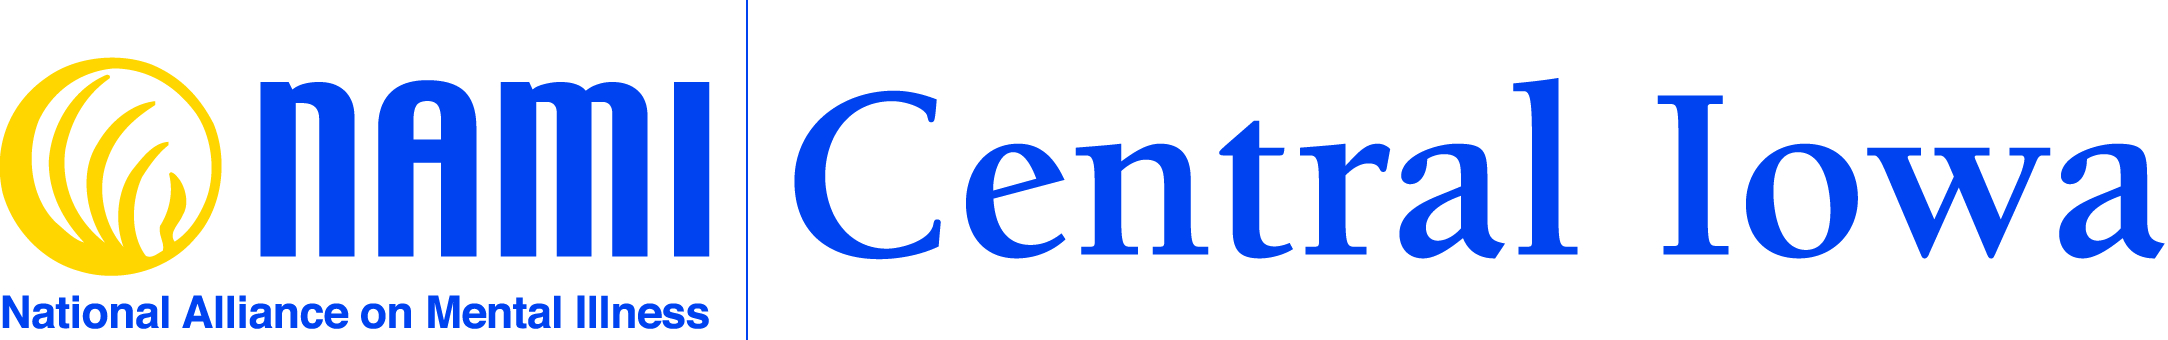 National Alliance on Mental Illness Central Iowa logo